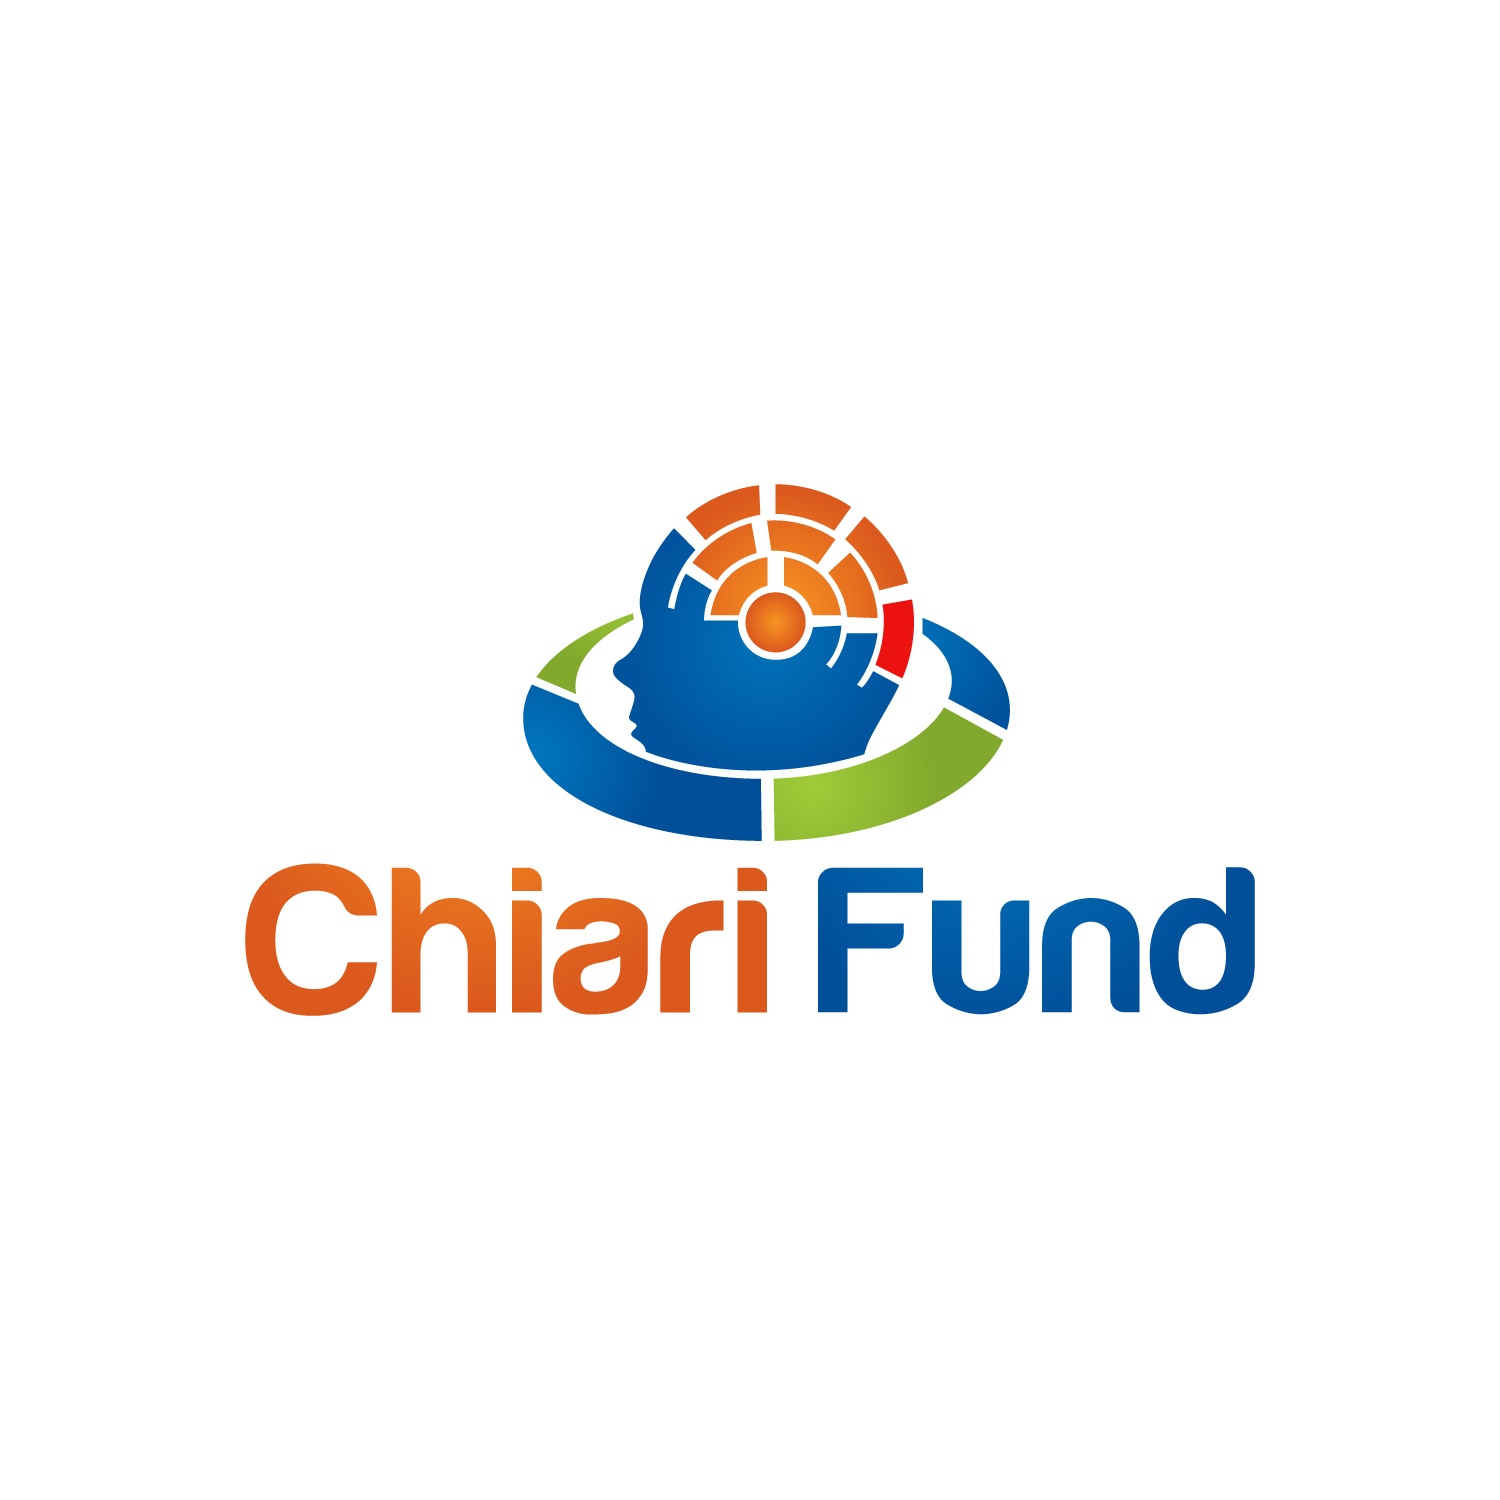 Chiari Fund logo